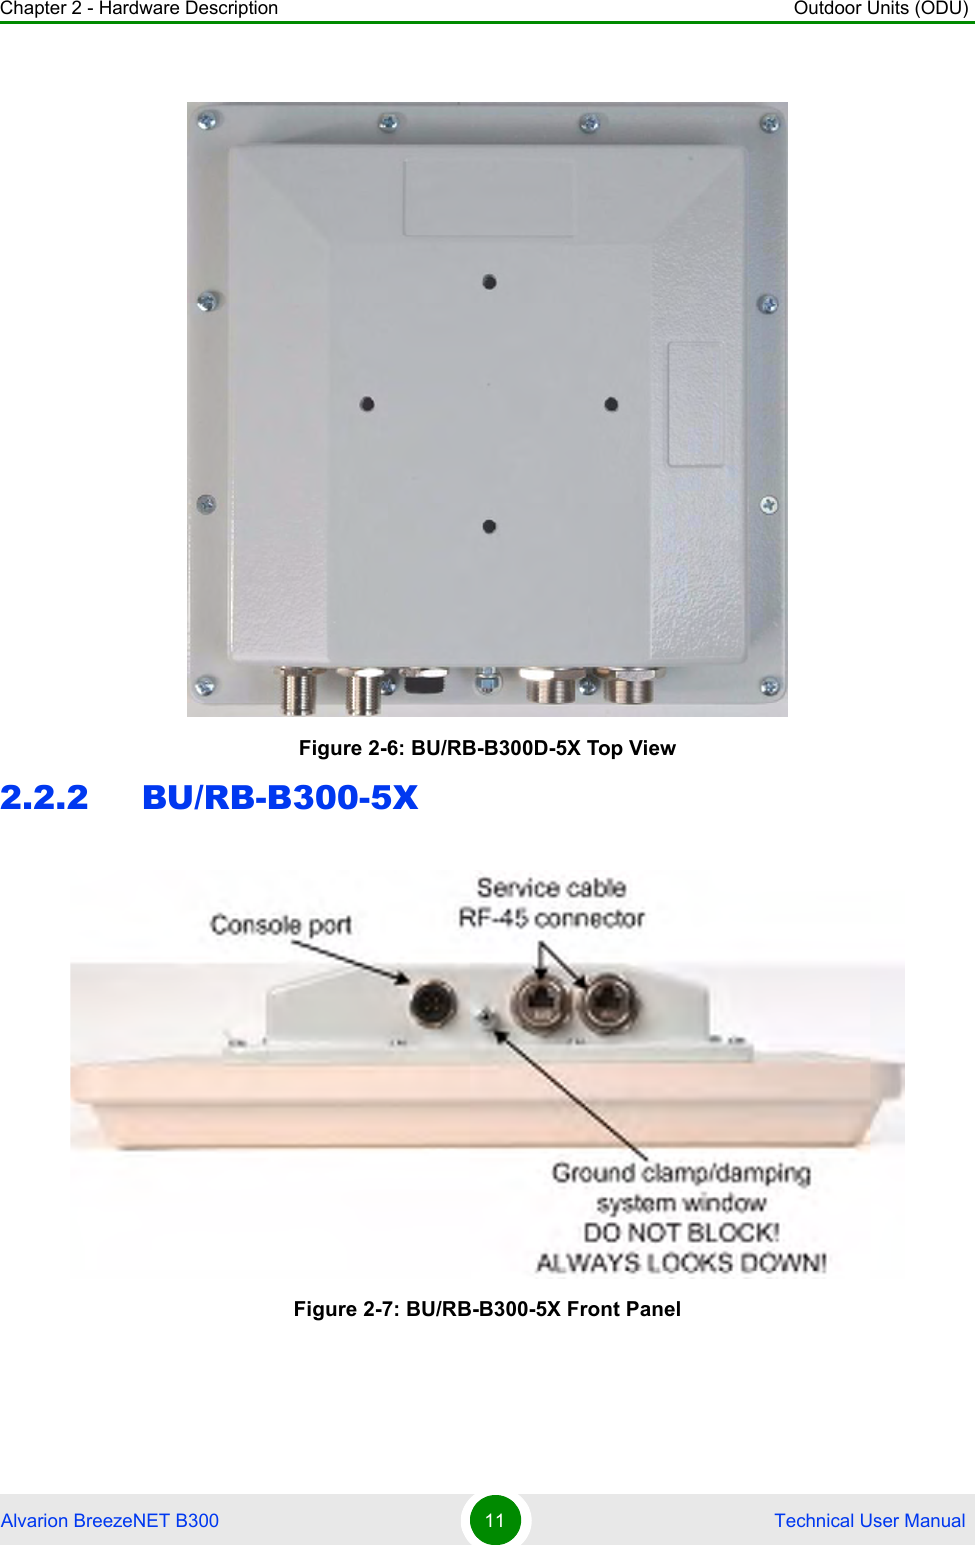 Chapter 2 - Hardware Description Outdoor Units (ODU)Alvarion BreezeNET B300 11  Technical User Manual2.2.2 BU/RB-B300-5XFigure 2-6: BU/RB-B300D-5X Top ViewFigure 2-7: BU/RB-B300-5X Front Panel